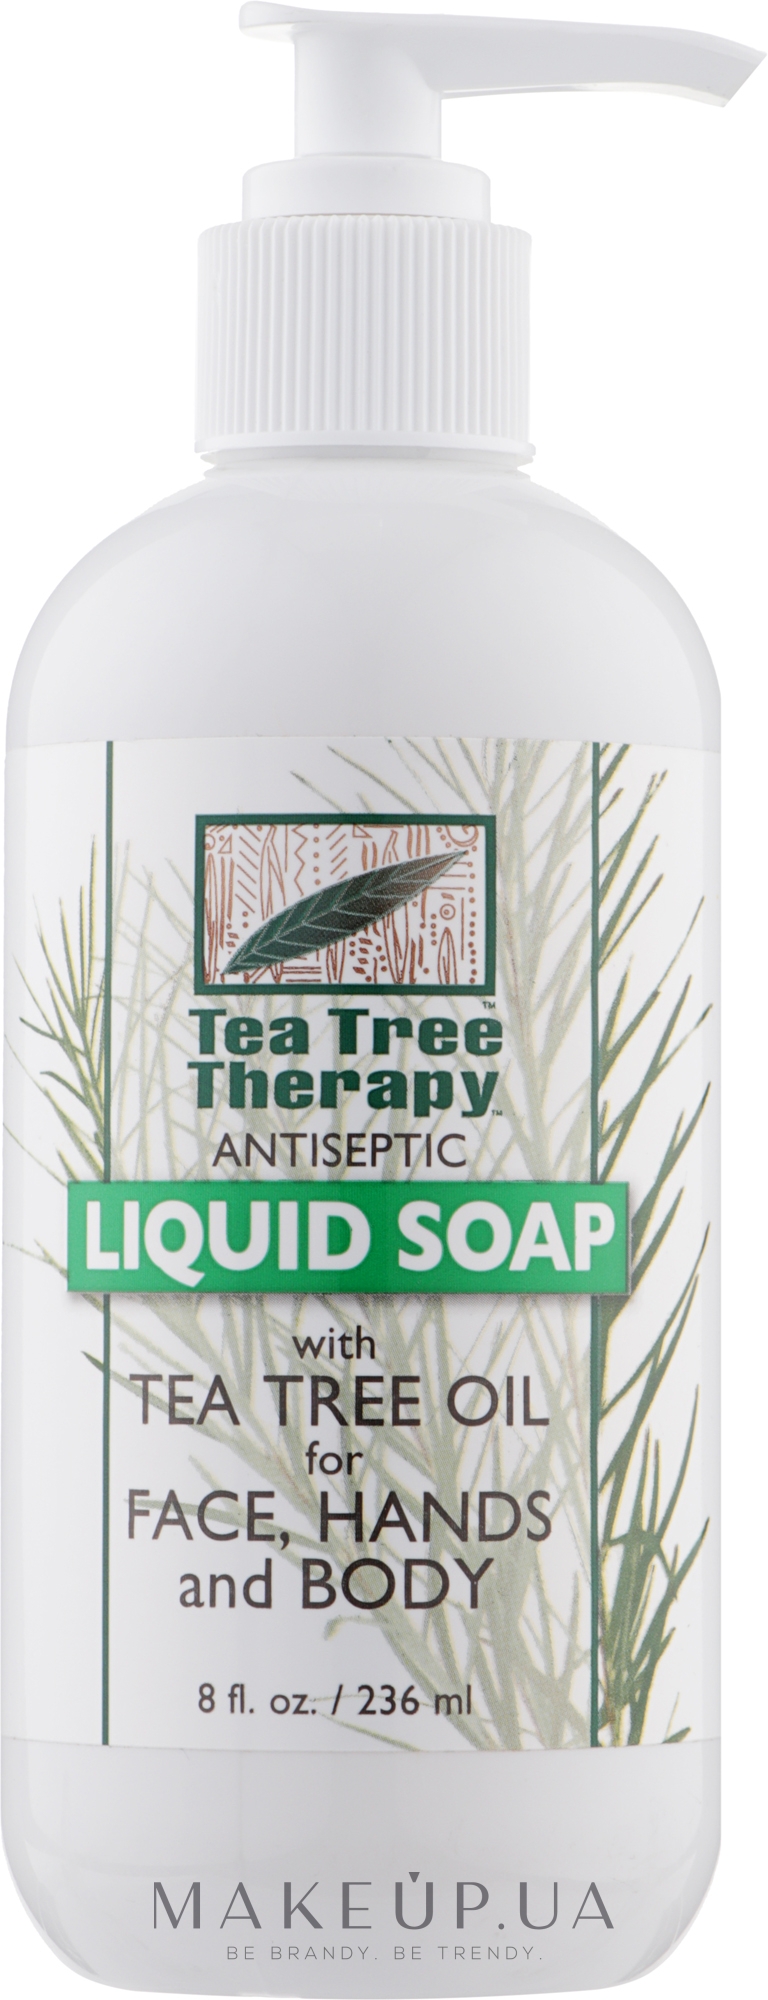 Антисептическое жидкое мыло для лица и рук с маслом чайного дерева - Tea Tree Therapy Antiseptic Liquid Soap With Tea Tree Oil  — фото 236ml